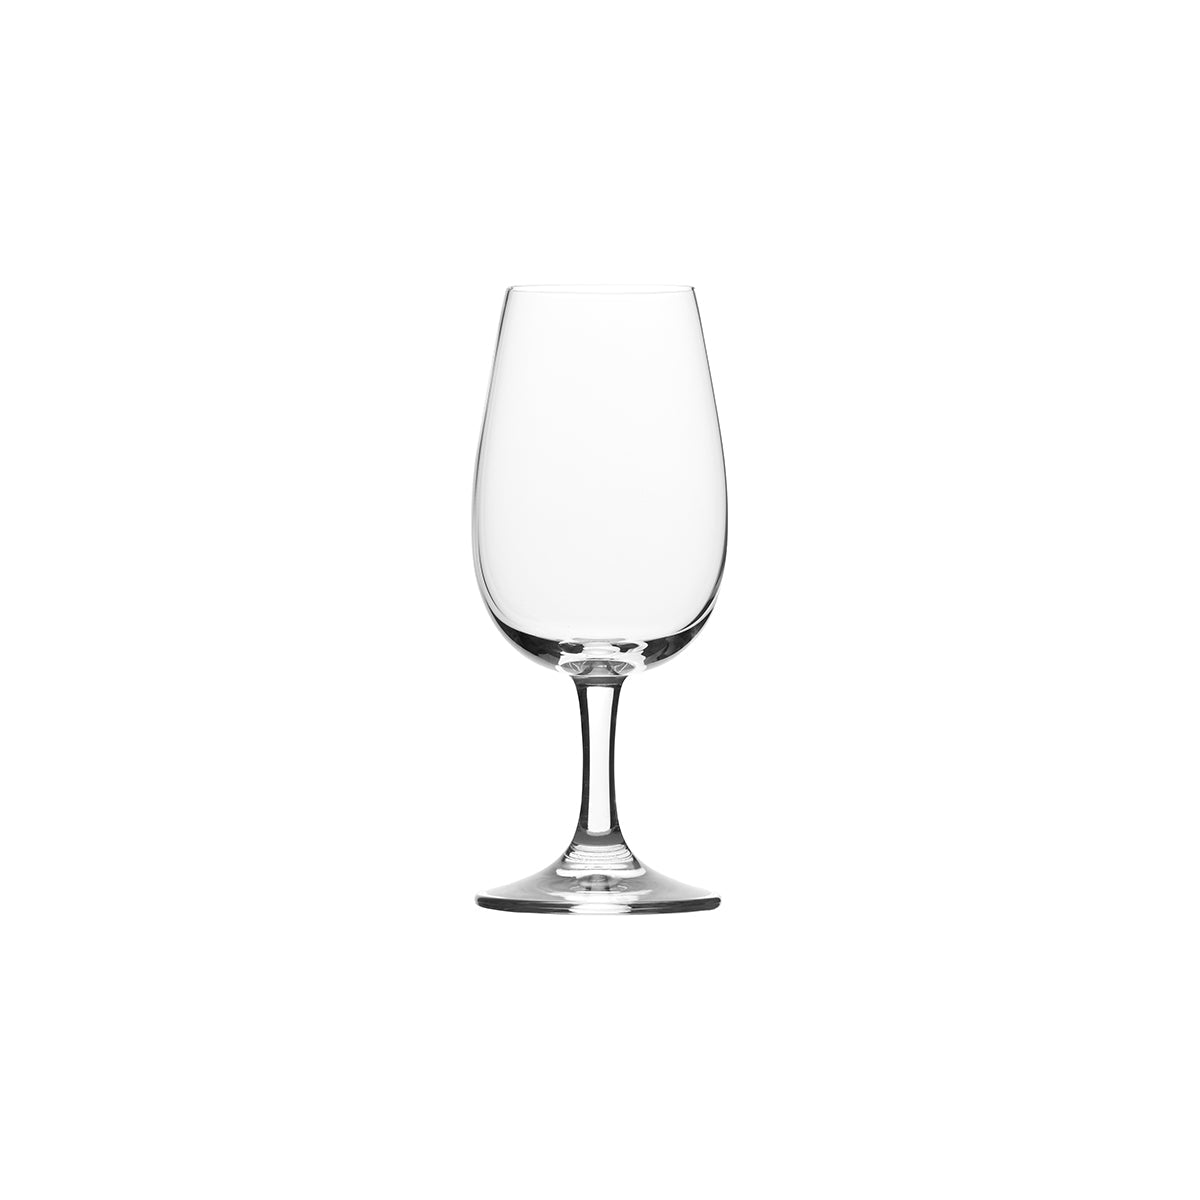 360-040 Stolzle Wine Taster 220ml Tomkin Australia Hospitality Supplies